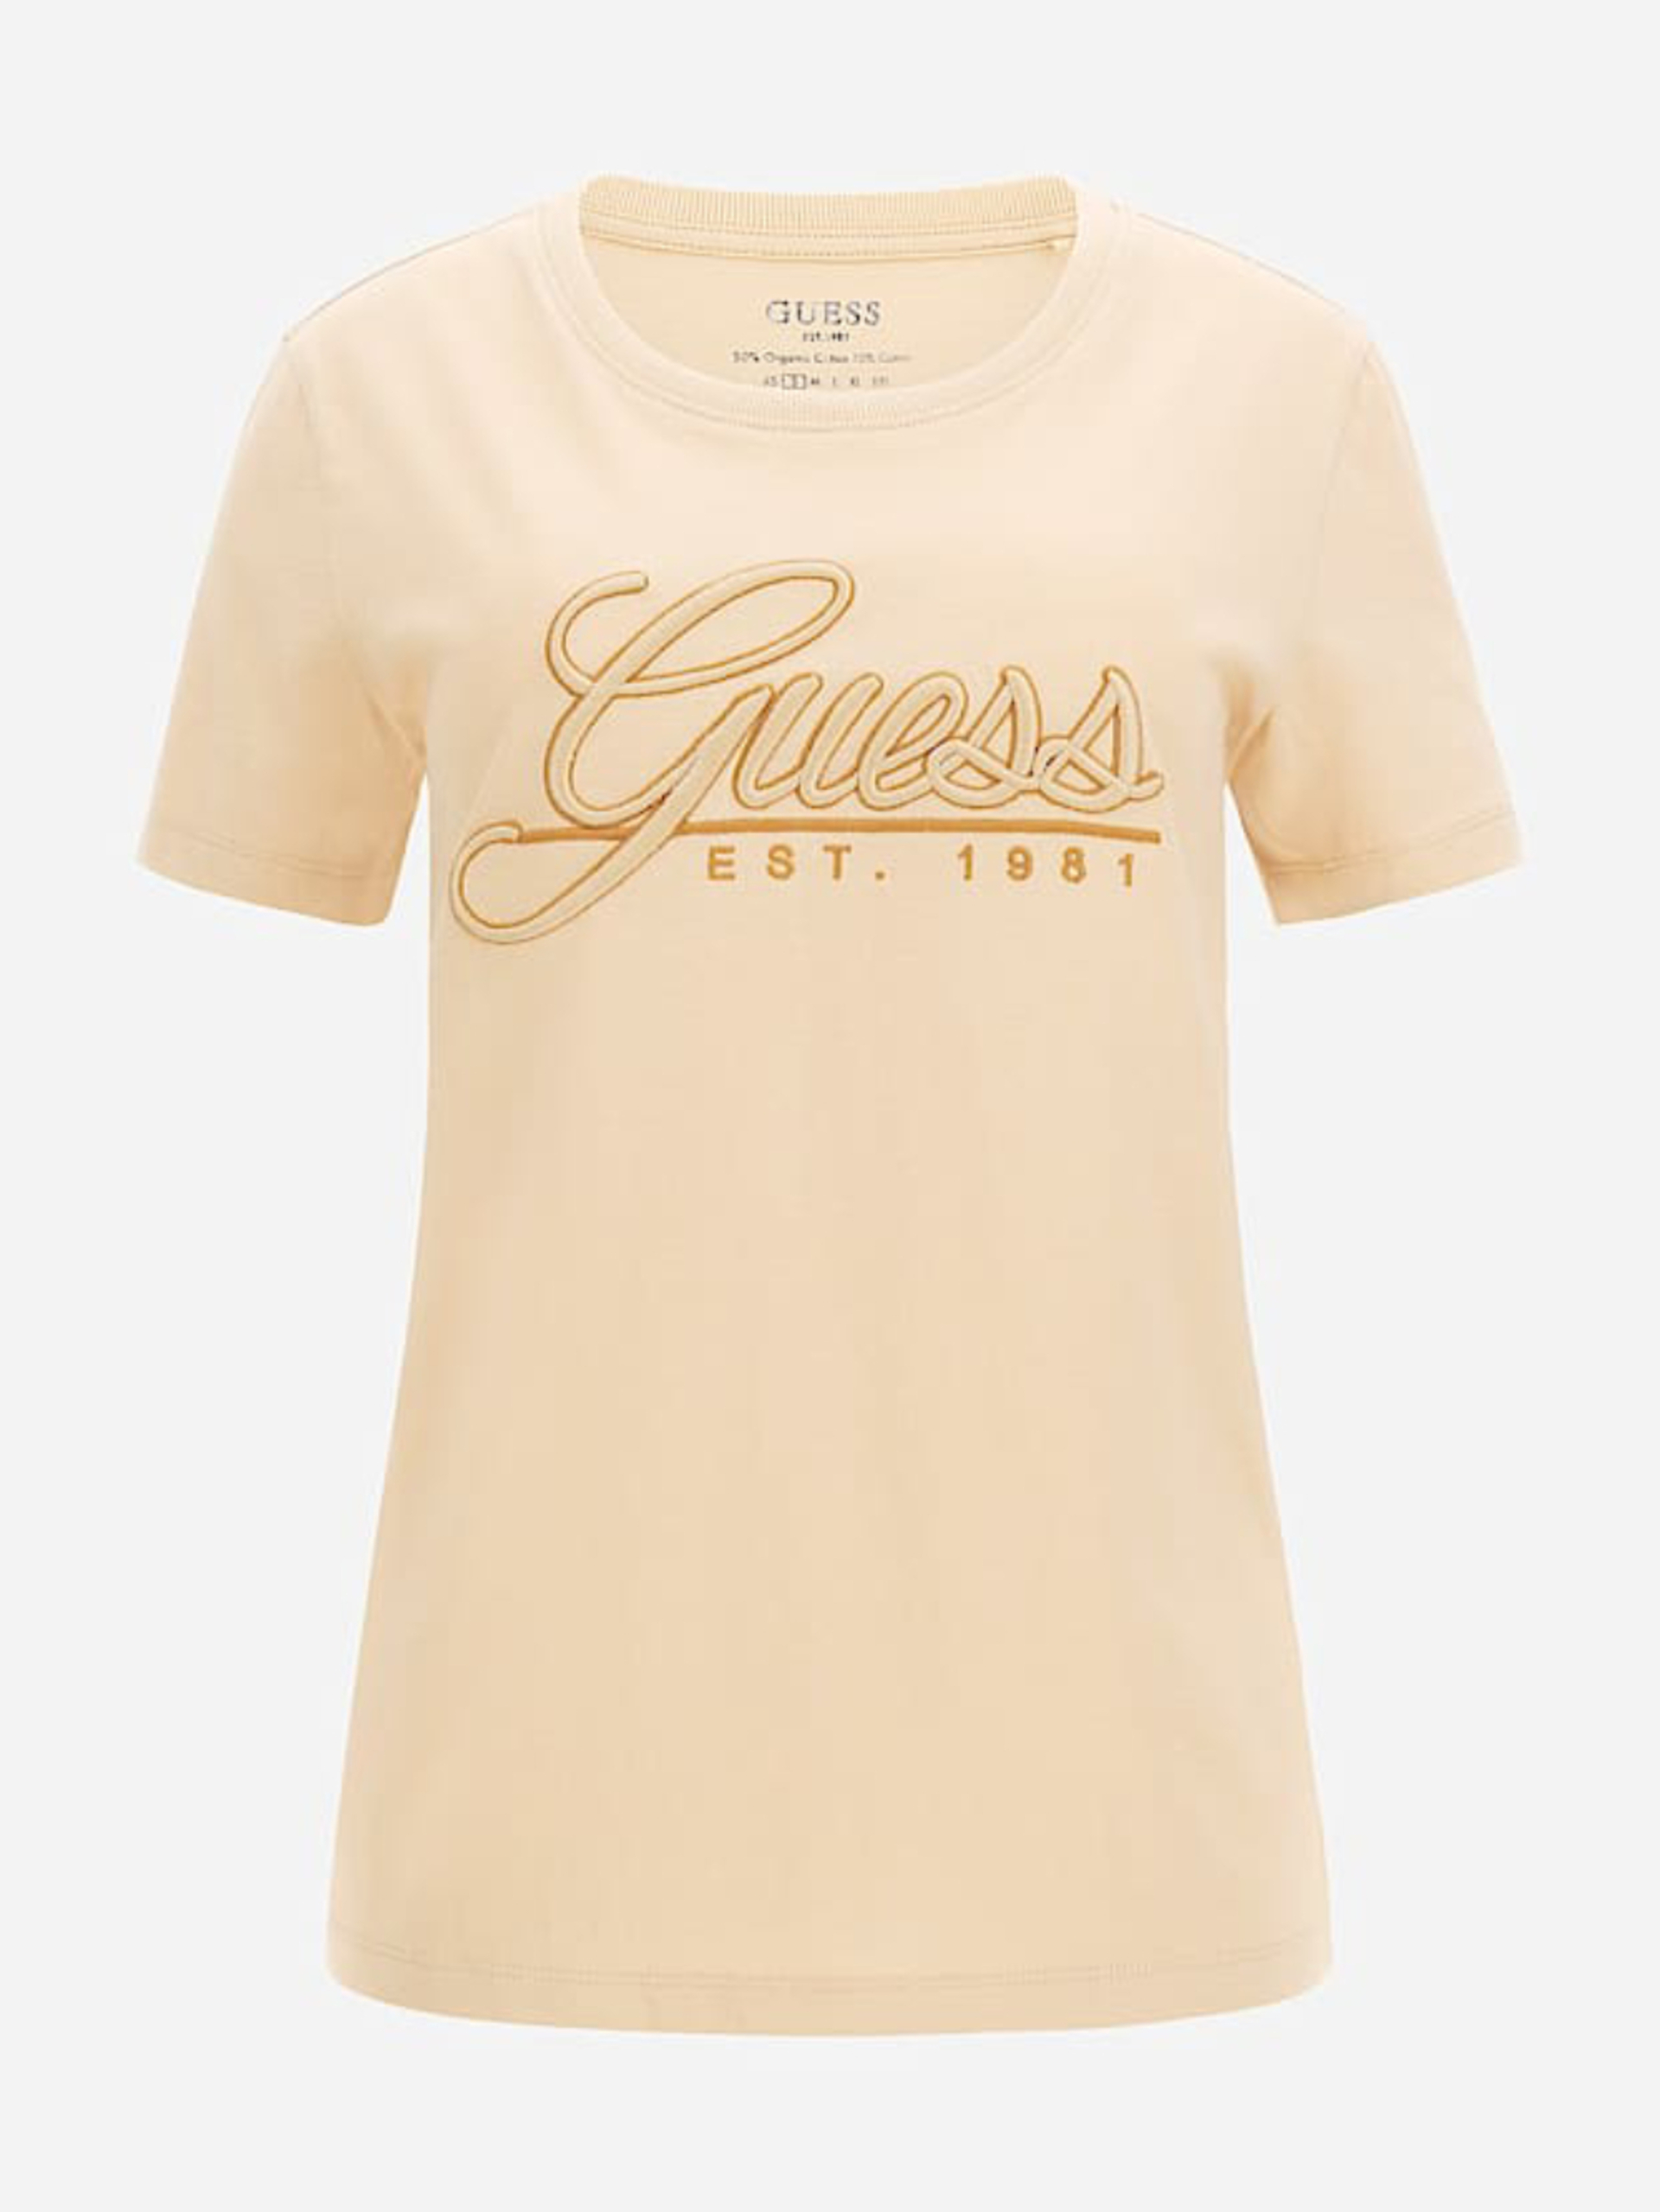 Guess dámské béžové tričko - XS (A60N)